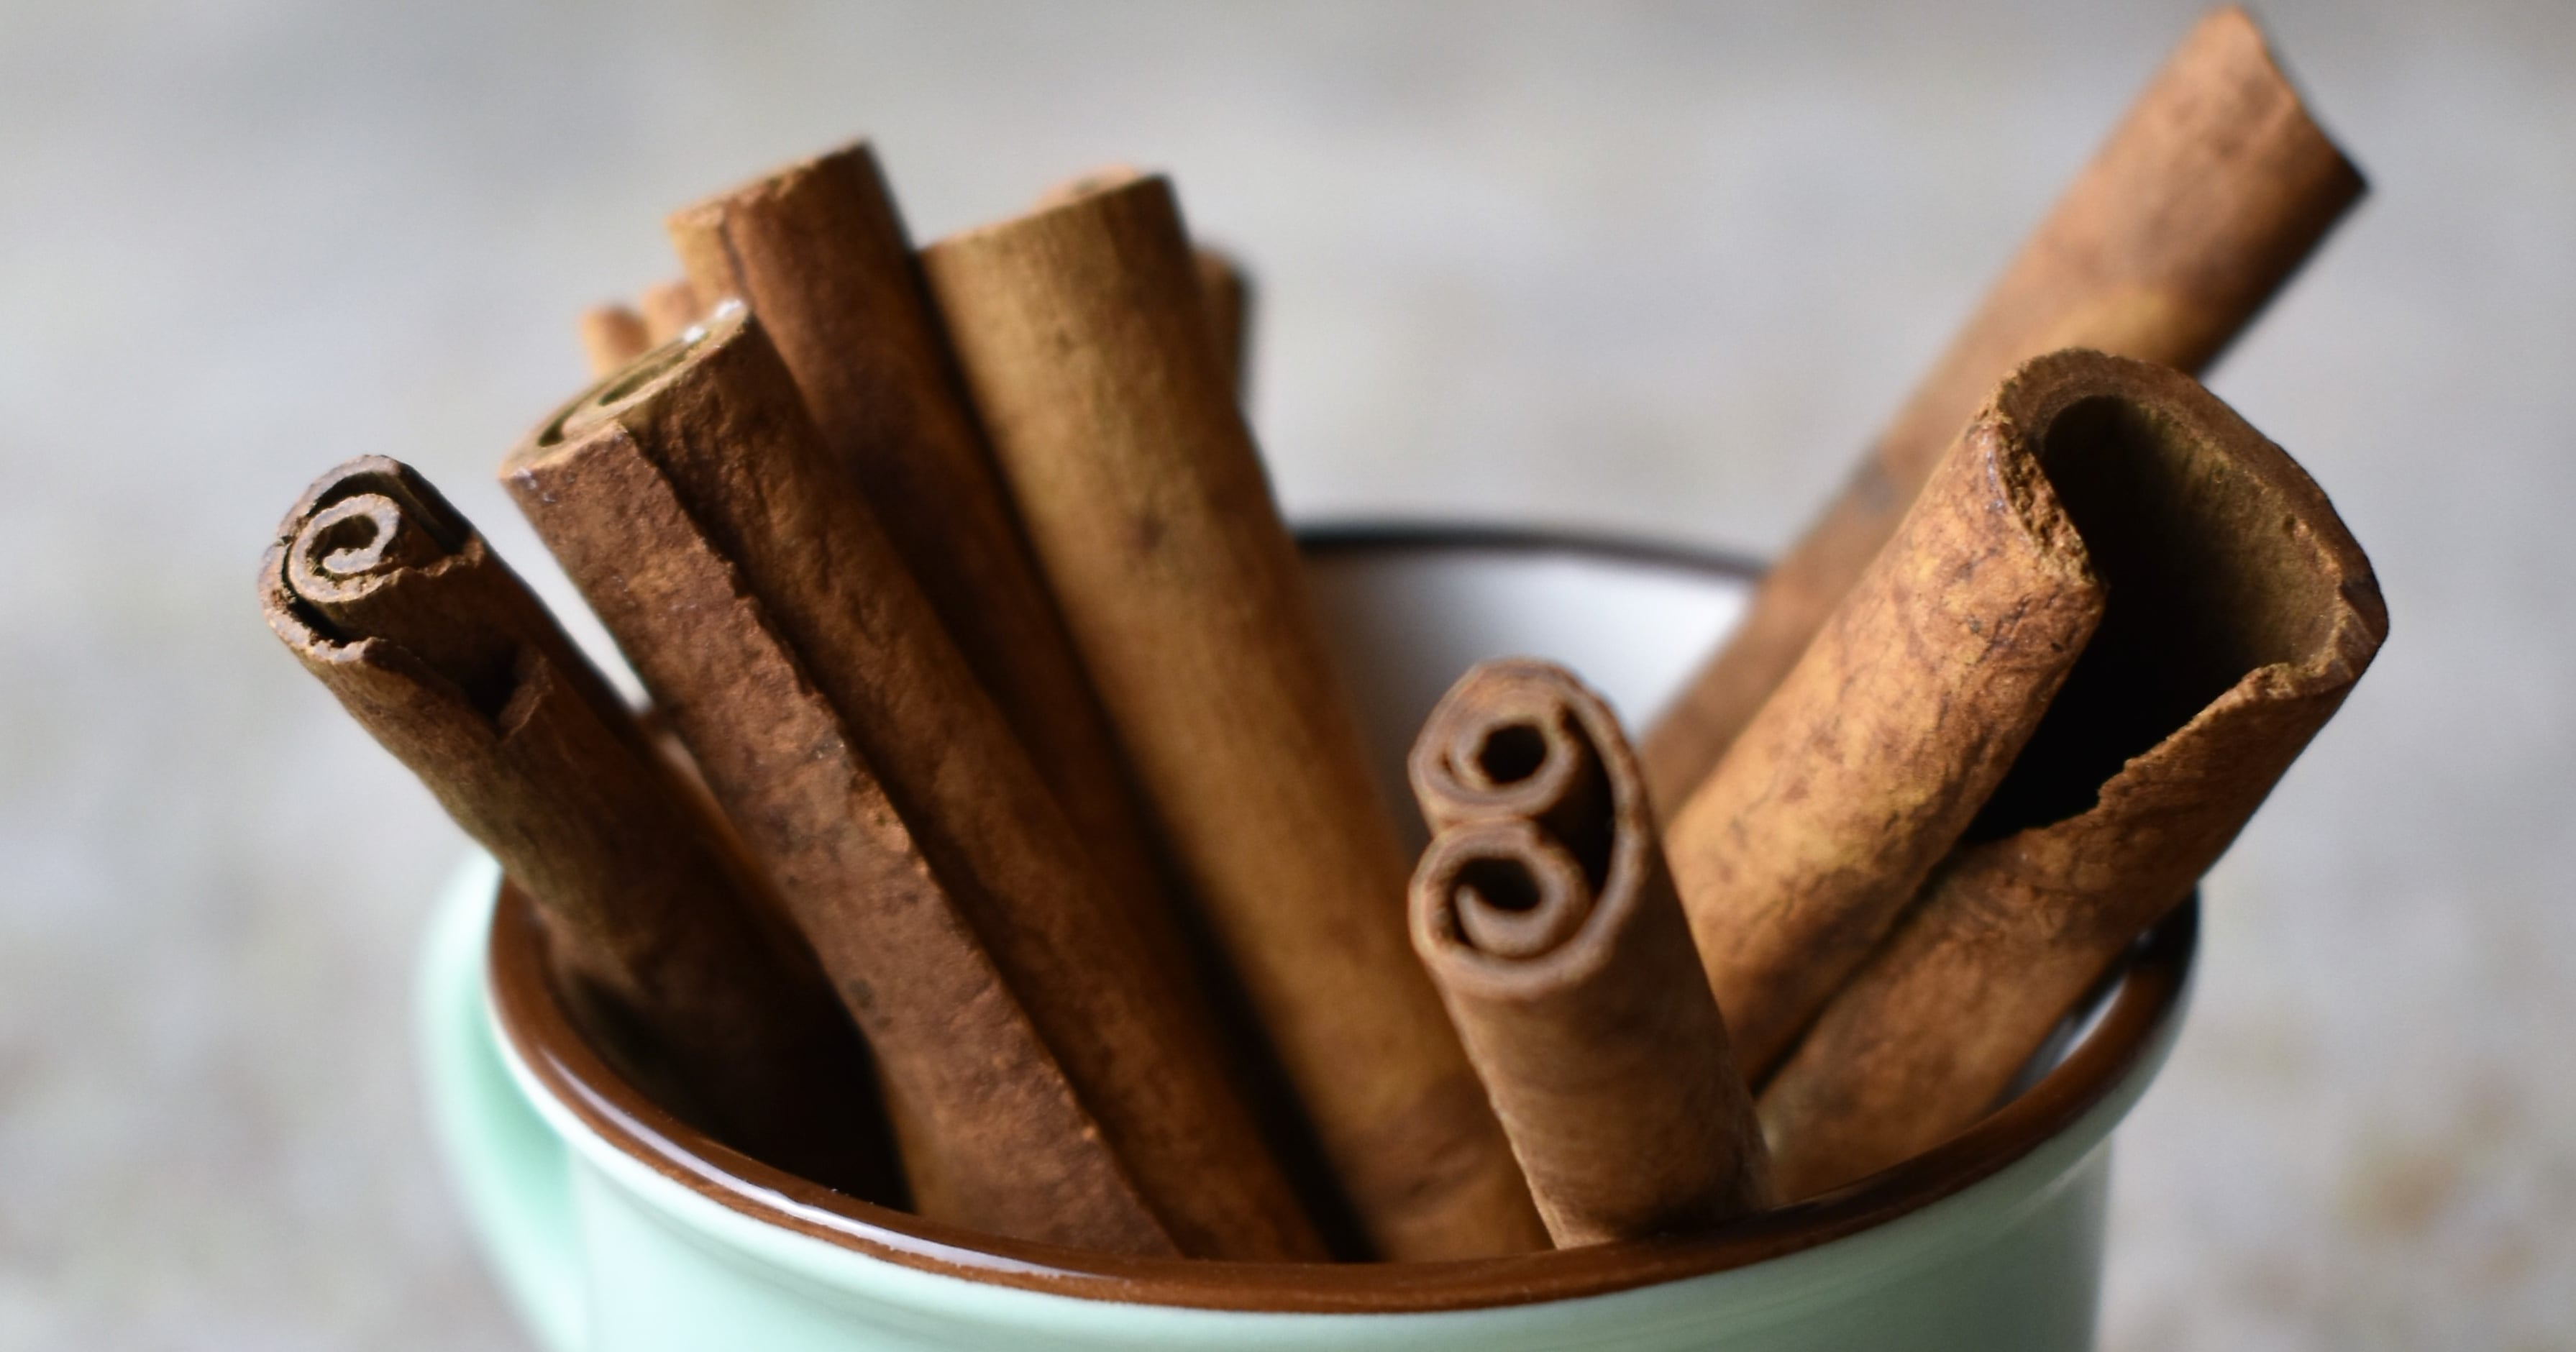 Health Benefits of Cinnamon, According to an RD